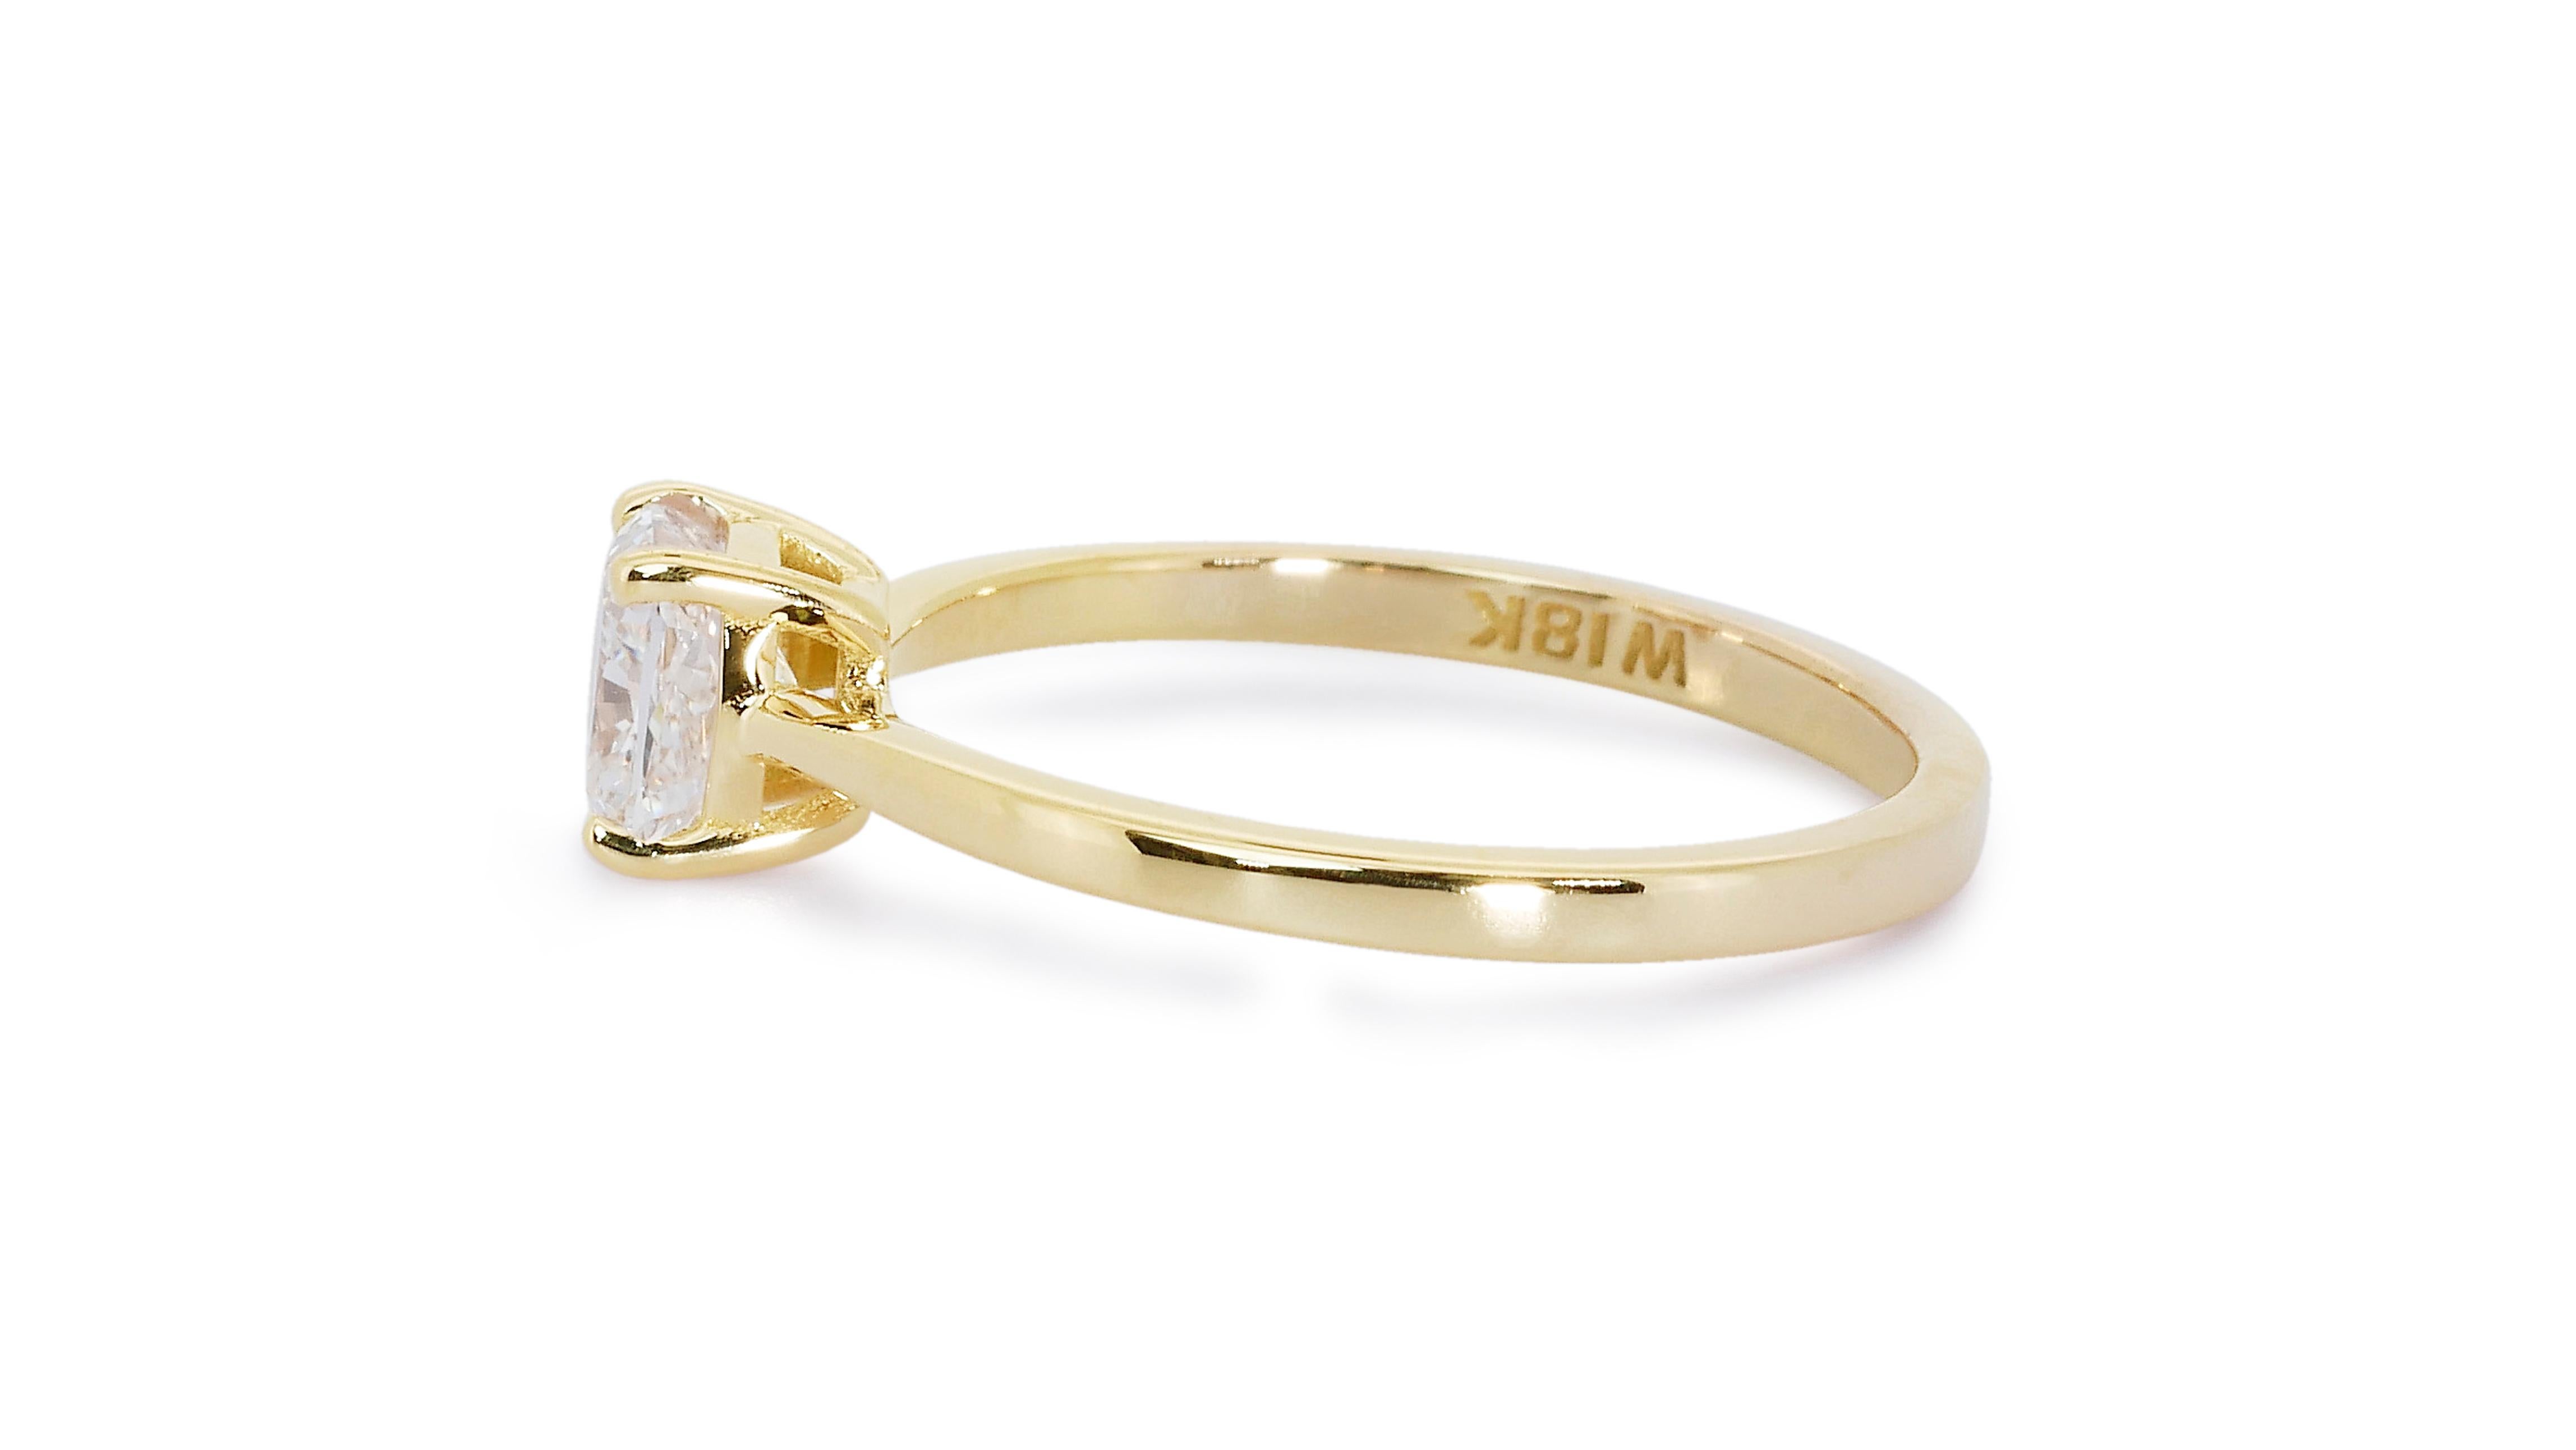 Women's Glamorous 18k Yellow Gold Solitaire Ring w/ 0.80 ct Natural Diamonds IGI Cert For Sale